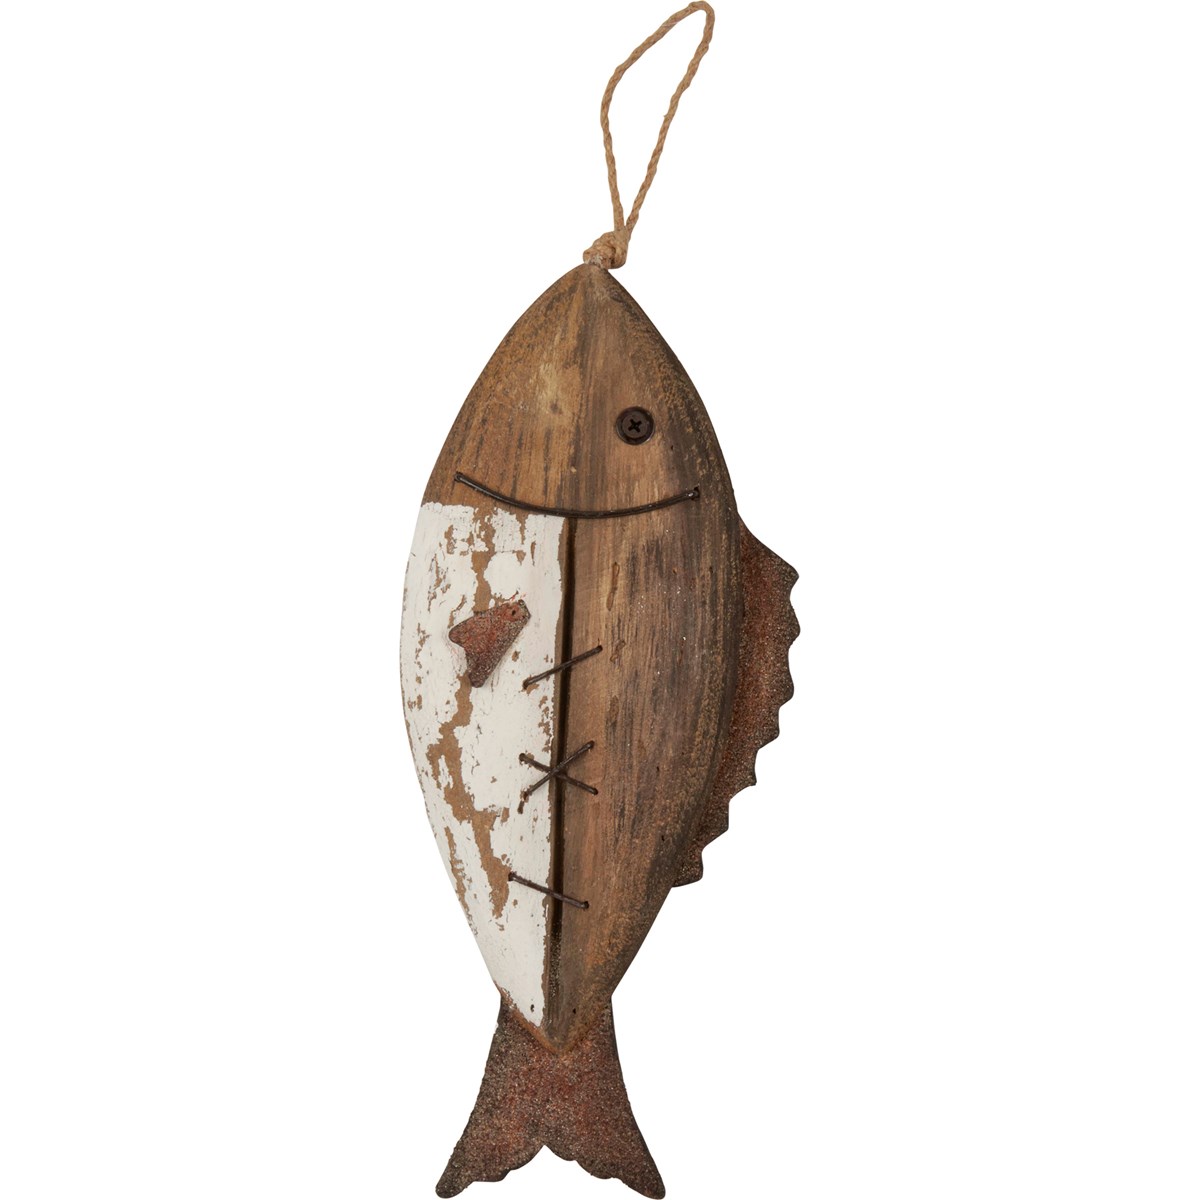 Driftwood Fish Hanging Decor - Wood, Jute